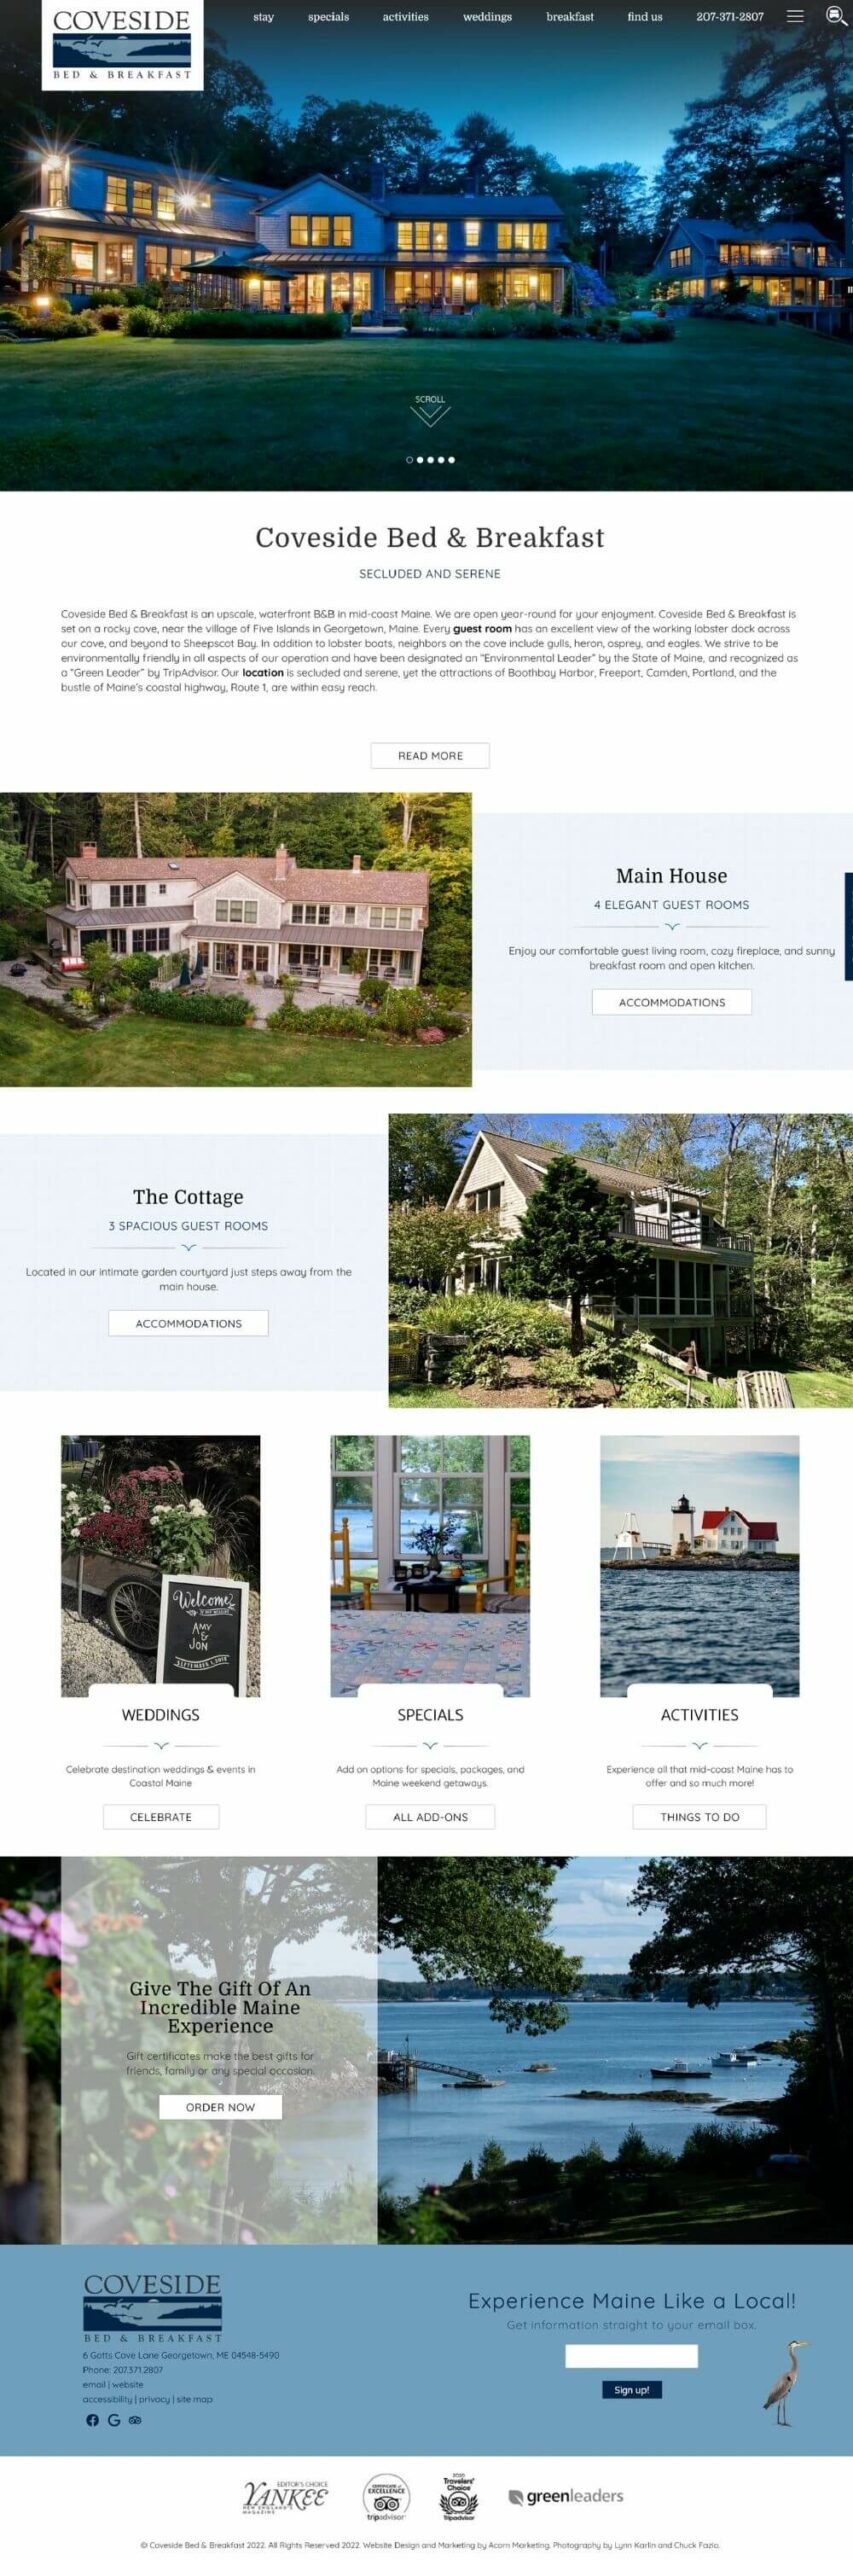 Coveside Bed and Breakfast website homepage screenshot